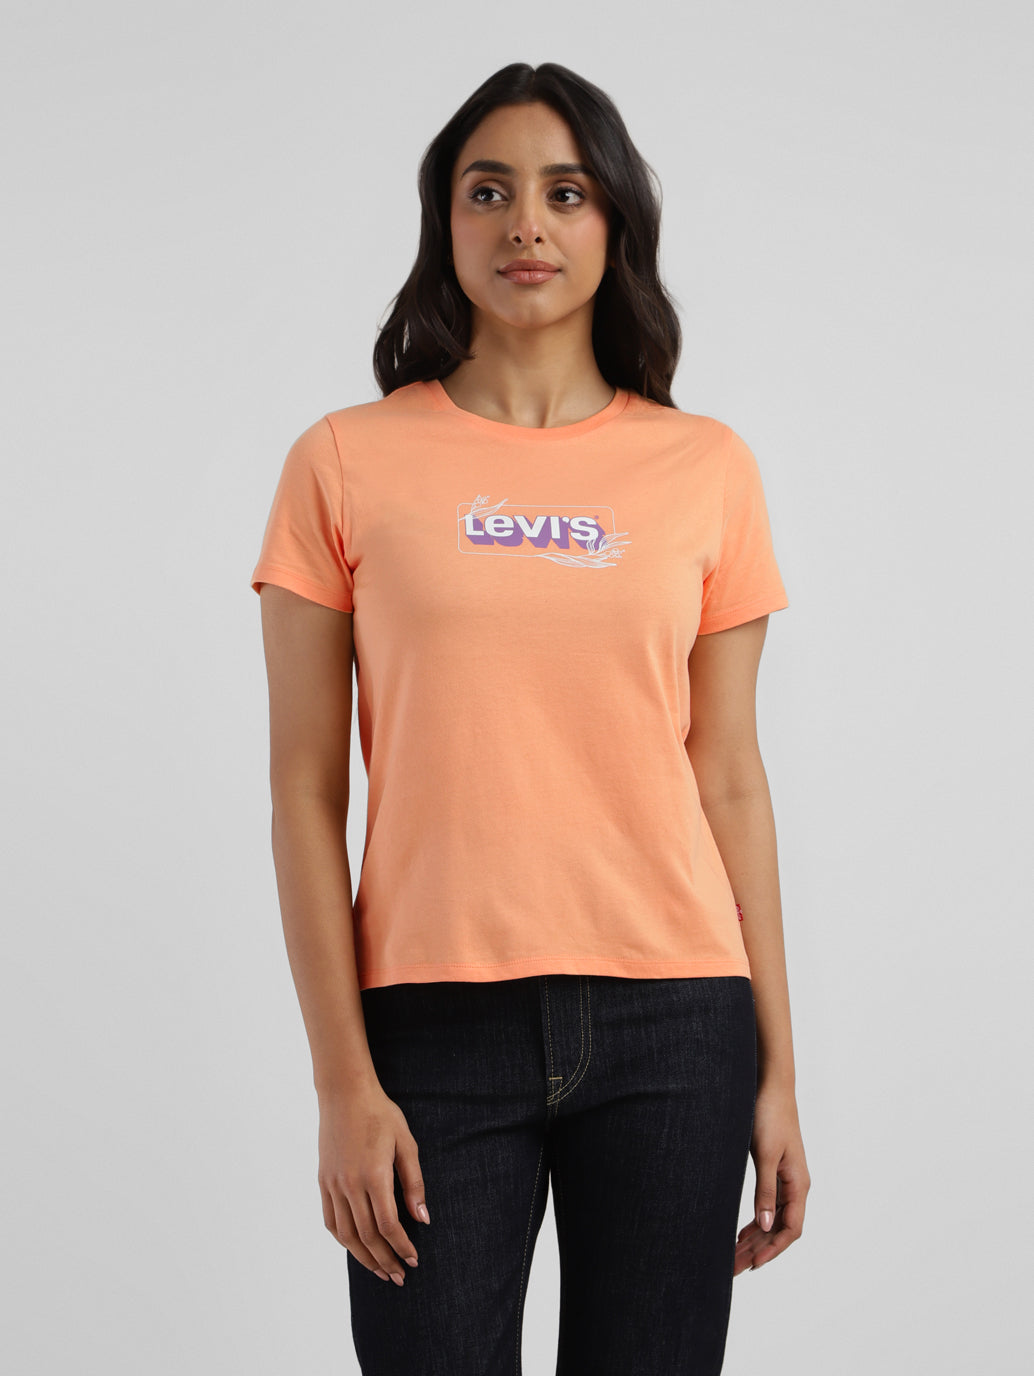 Women's Graphic Print Crew Neck T-shirt